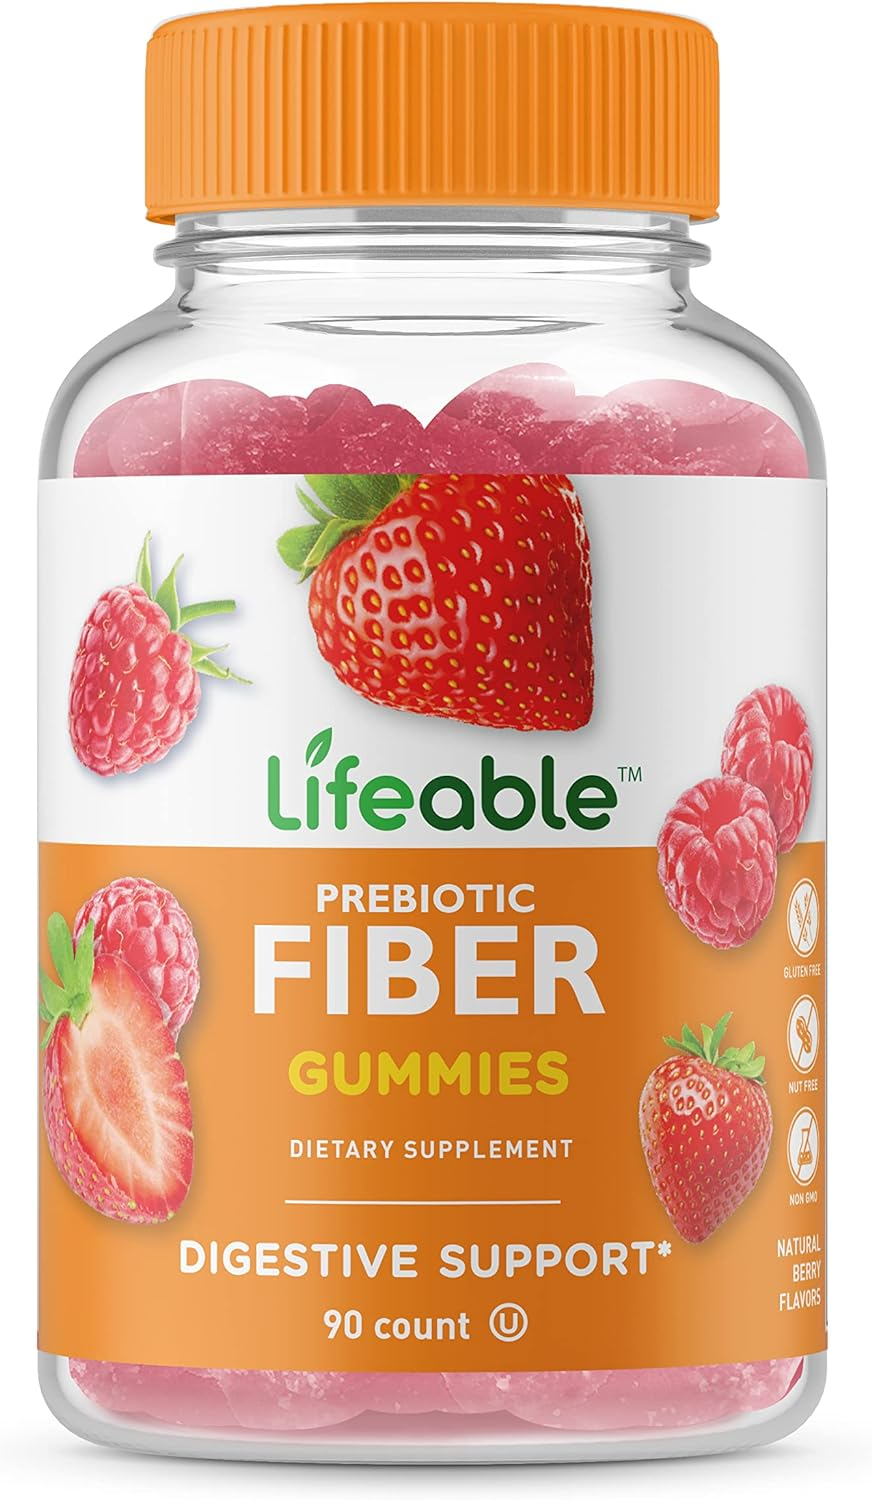 Lifeable Prebiotic Fiber Supplement Gummies 5g - Great Tasting Natural Flavored Gummy - Gluten Free, Vegetarian, GMO-Free Chewable - 90 Gummies - 45 Doses